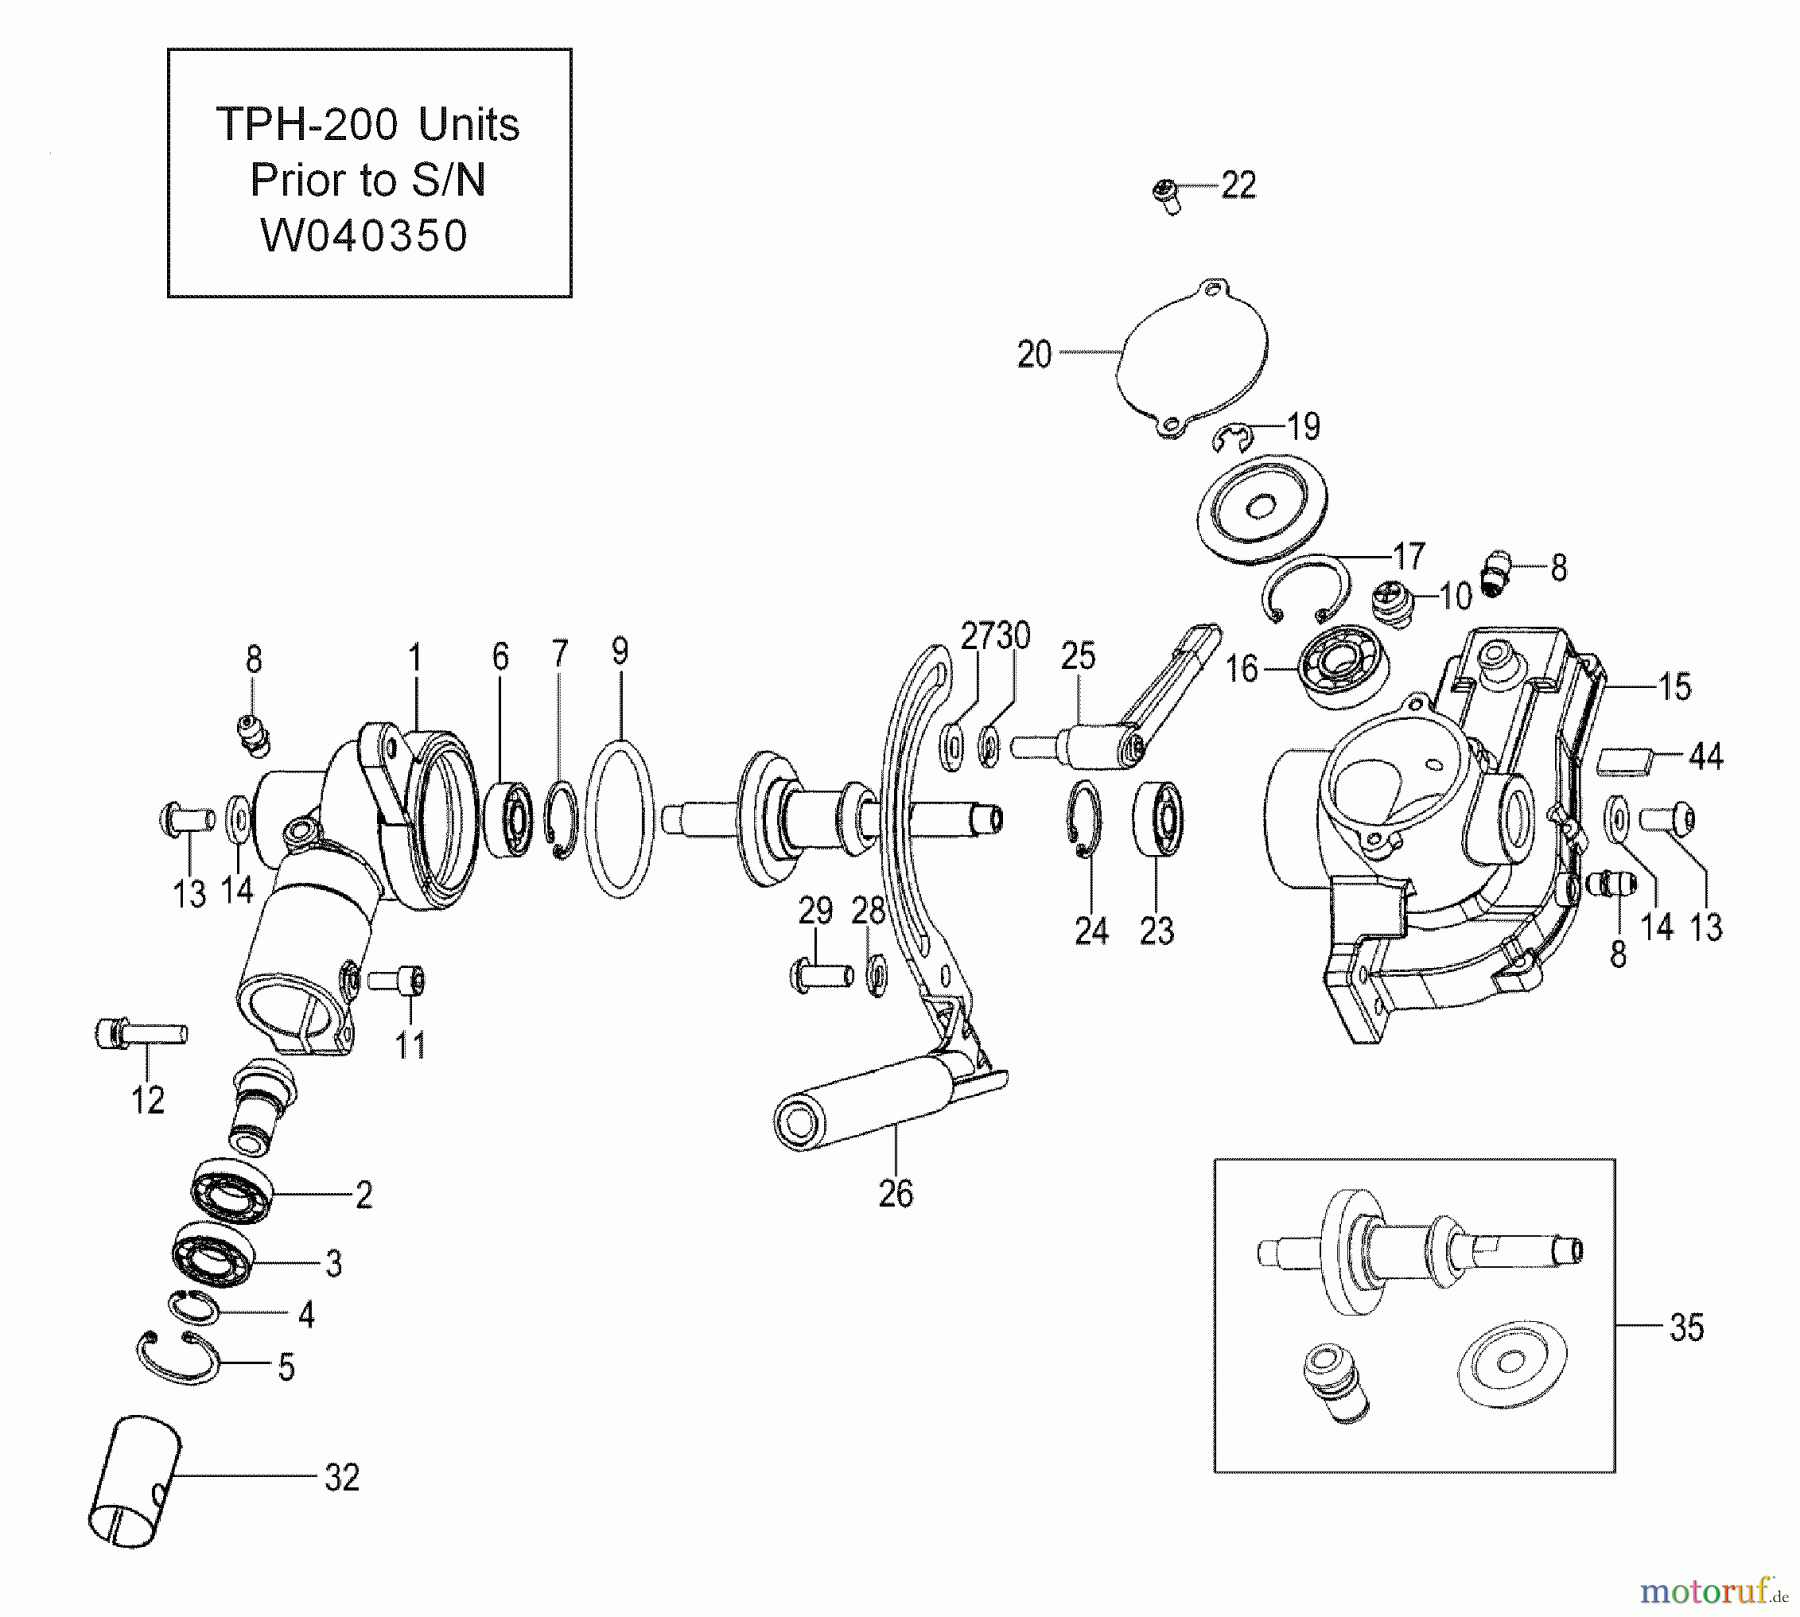  Tanaka Zubehör TPH-200 - Tanaka Articulating Hedgetrimmer Attachment Gear Case, Adjusting Handle, Gears (Prior to S/N W040350)